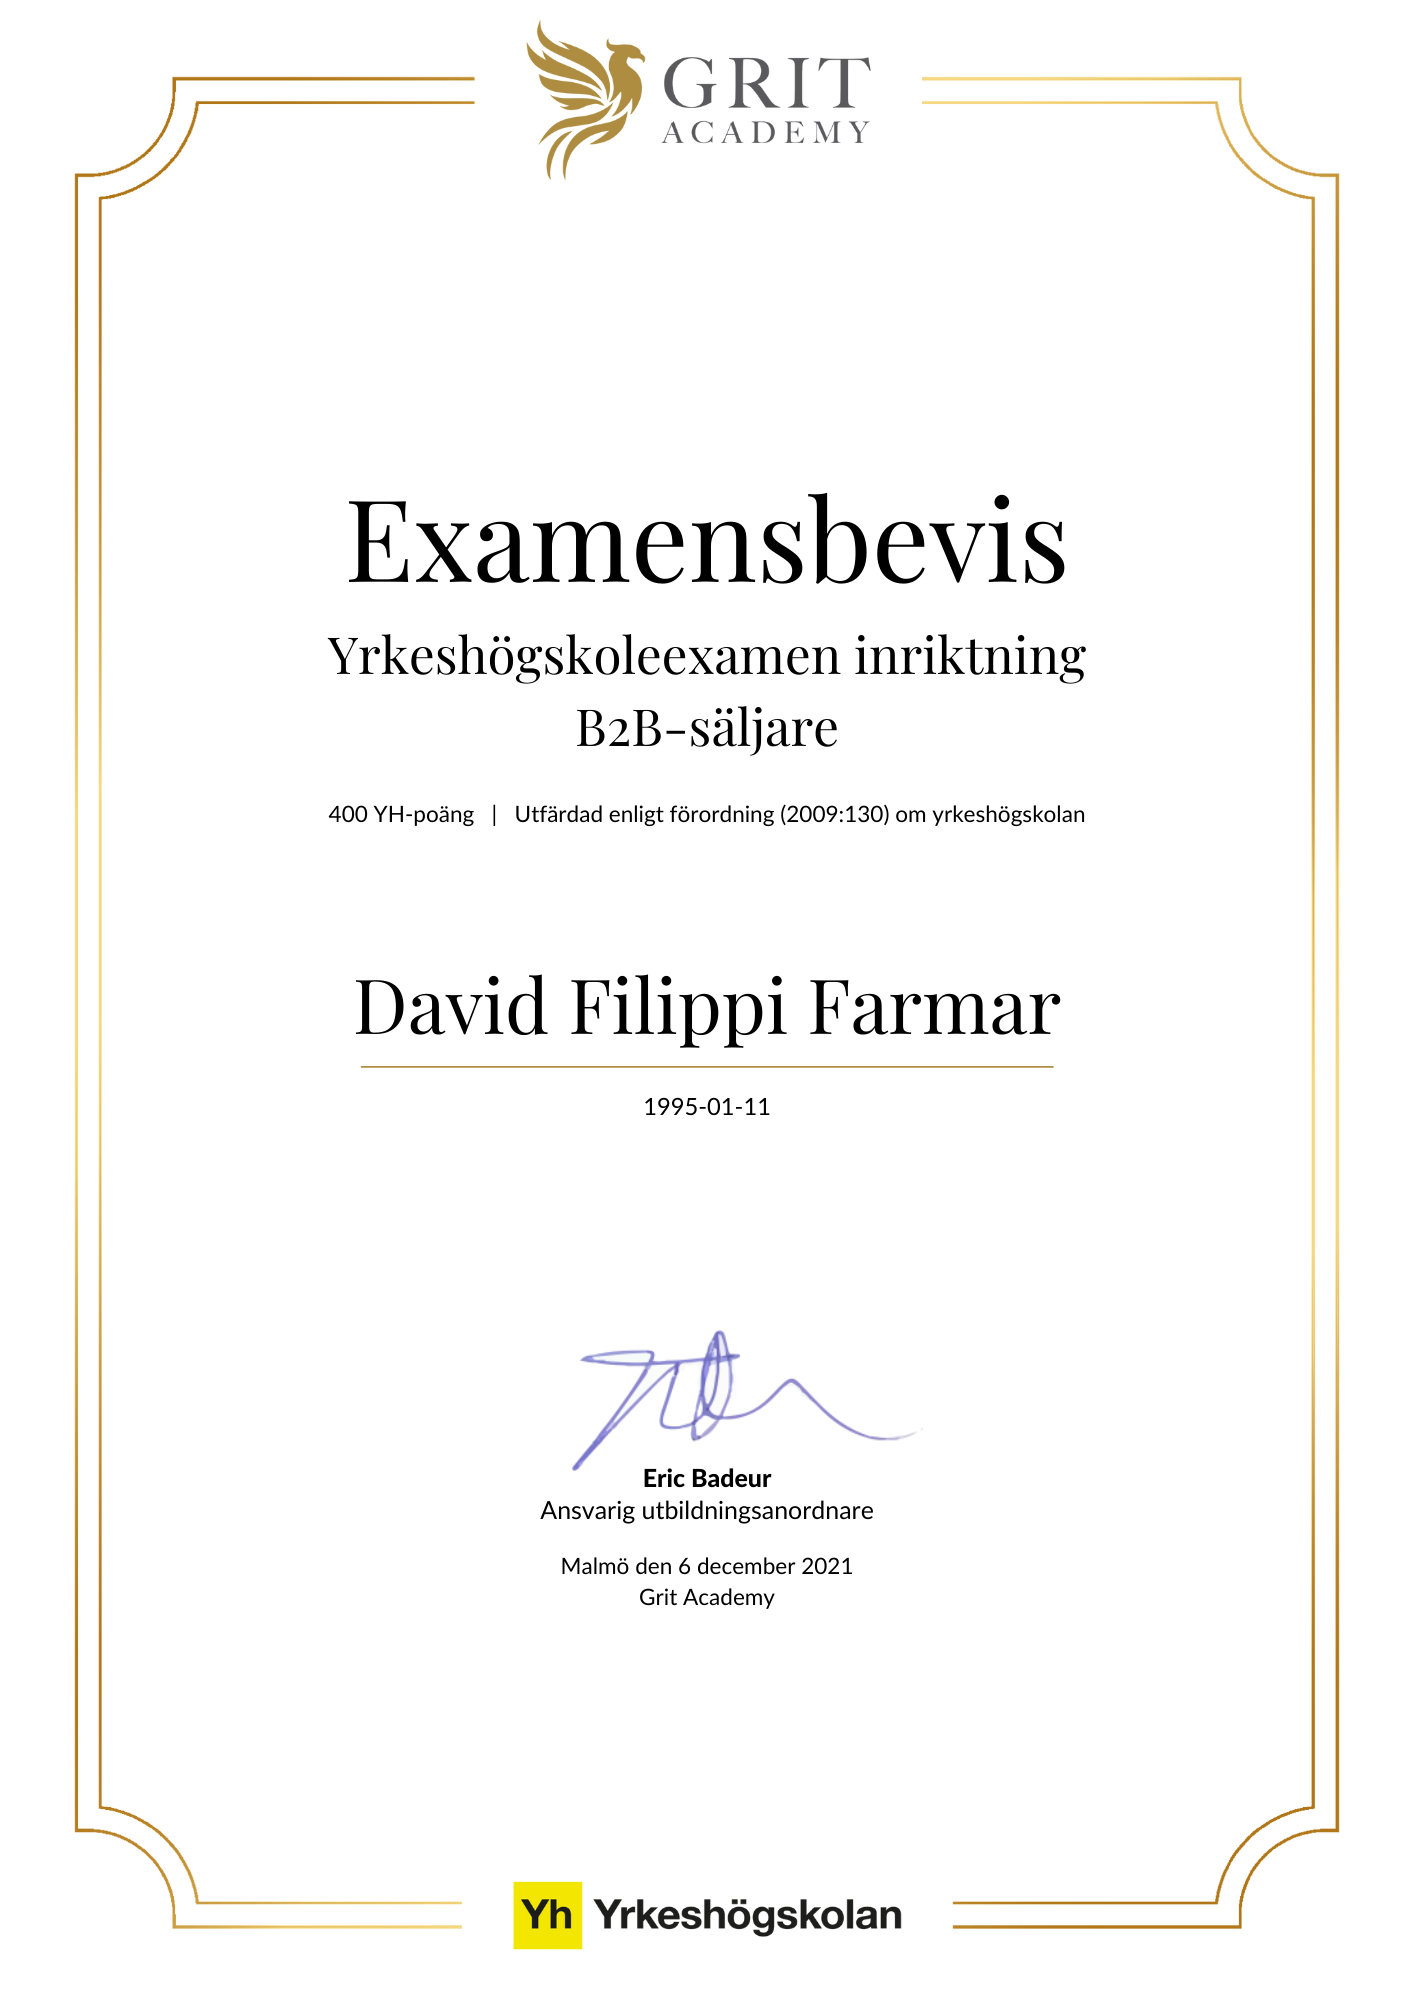 Examensbevis David Filippi Farmar - 1